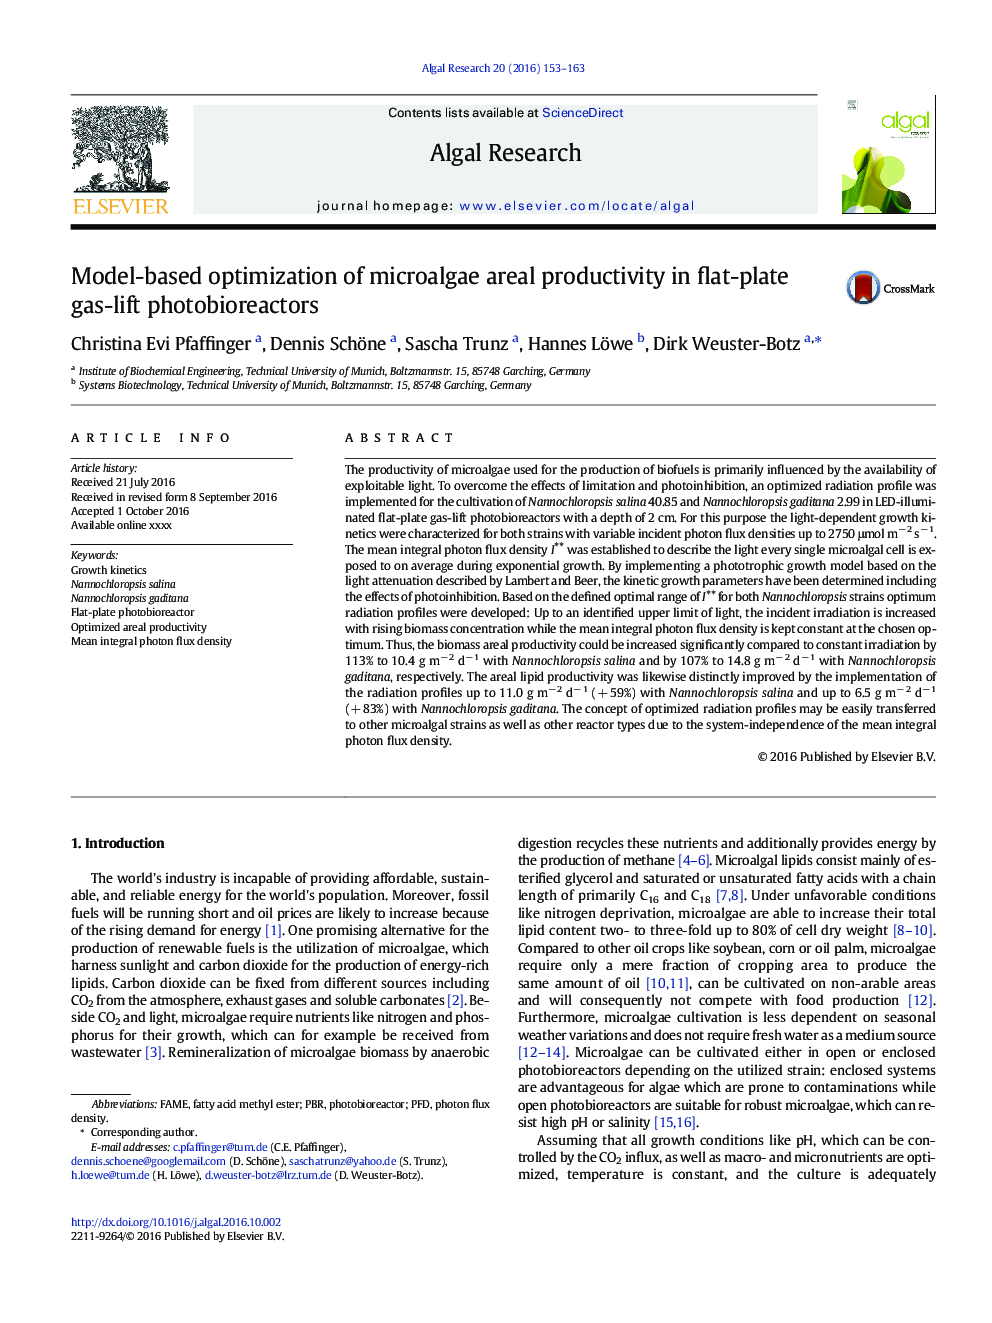 Model-based optimization of microalgae areal productivity in flat-plate gas-lift photobioreactors